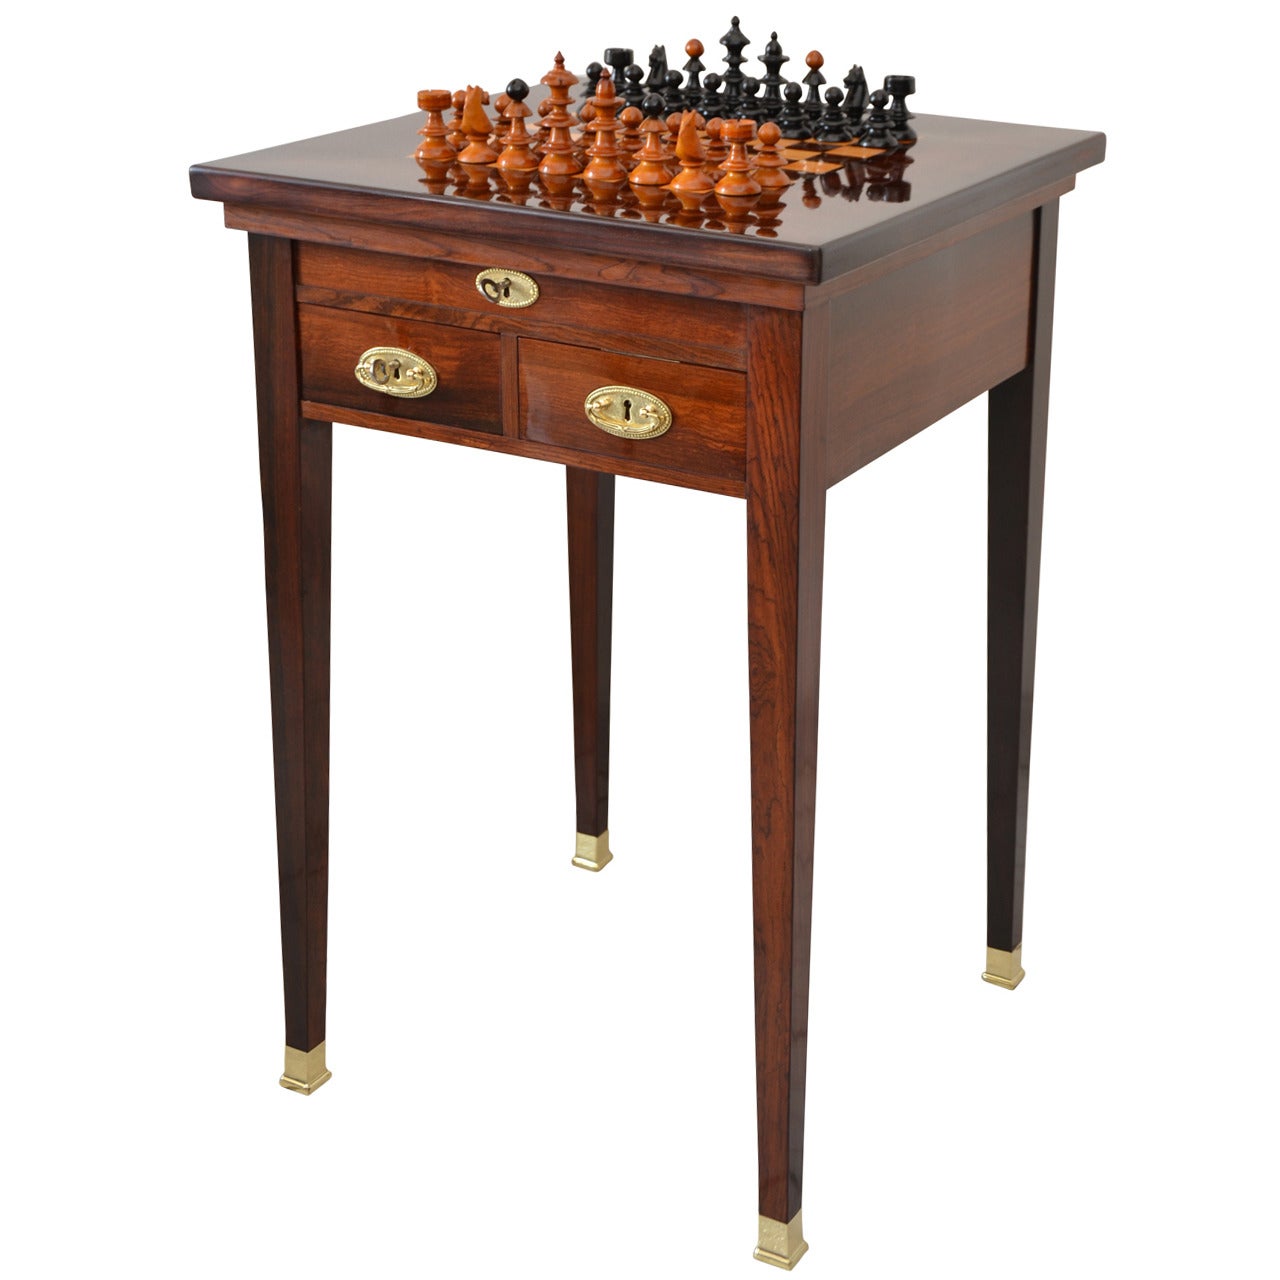 Viennese Convertible Chess Table in Rosewood Veneer